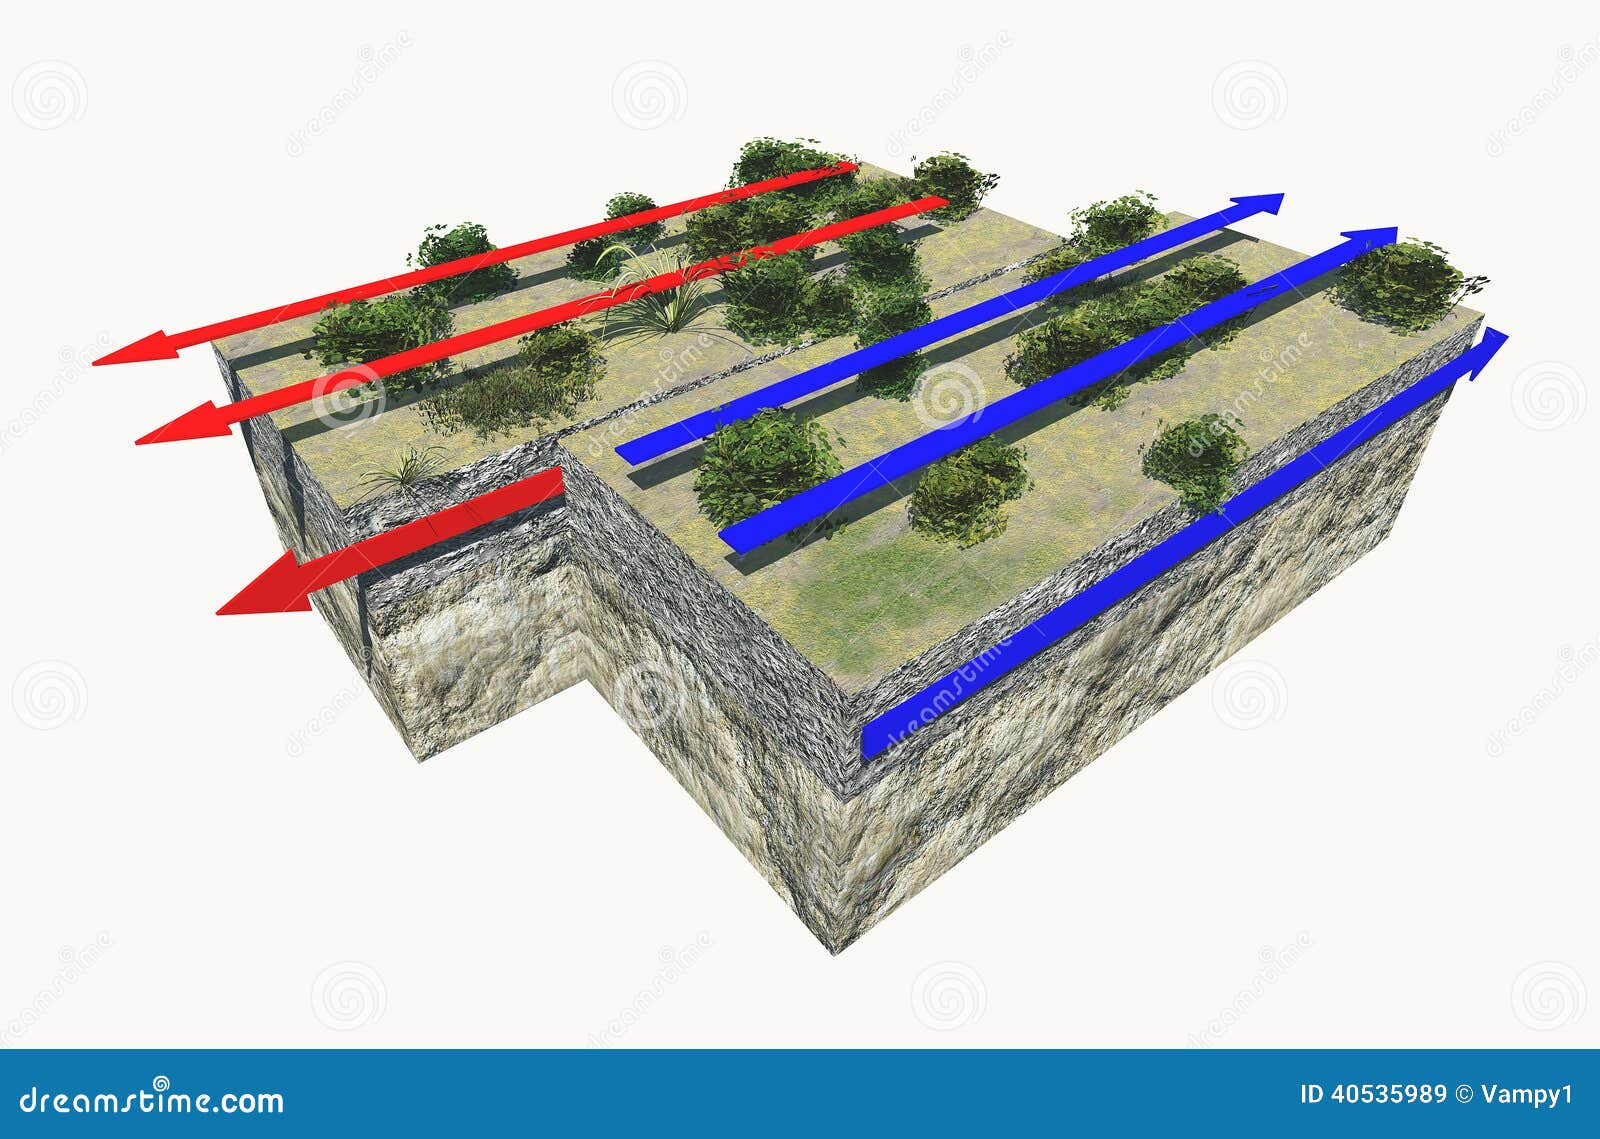 plate boundaries, transform boundaries, earthquake